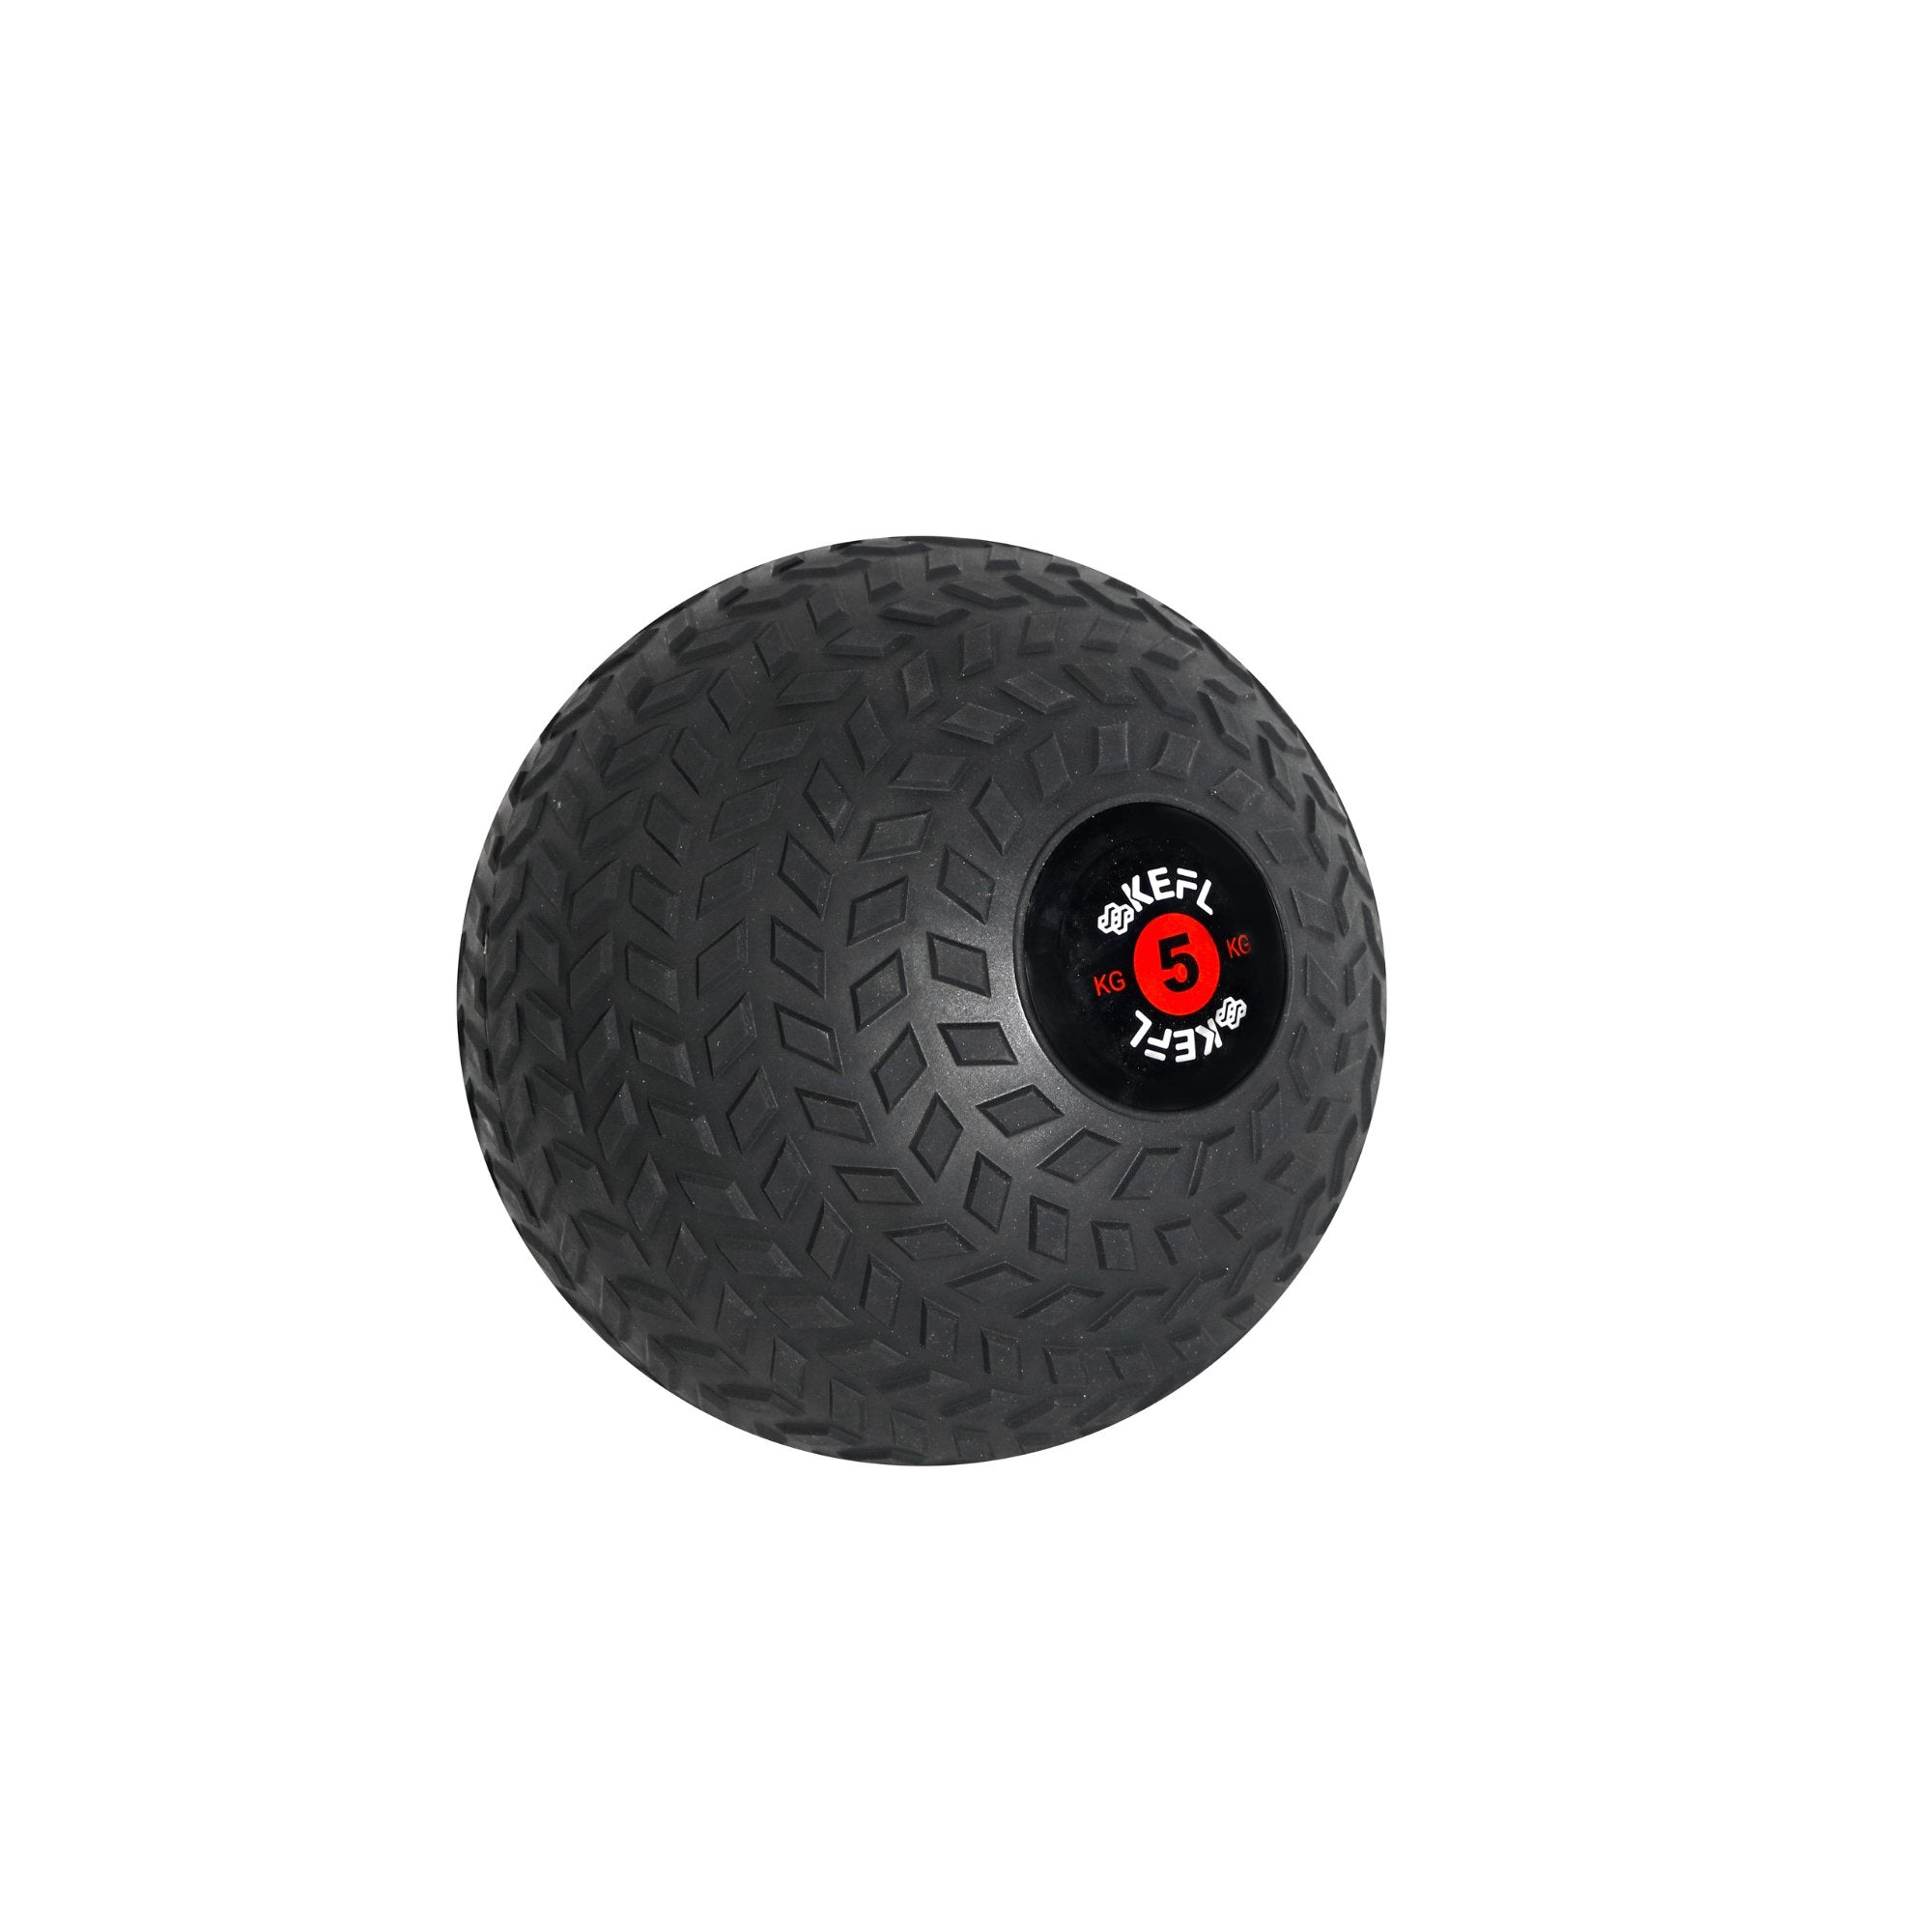 KEFL Tyre Tread Textured Slam Ball - KEFLUK